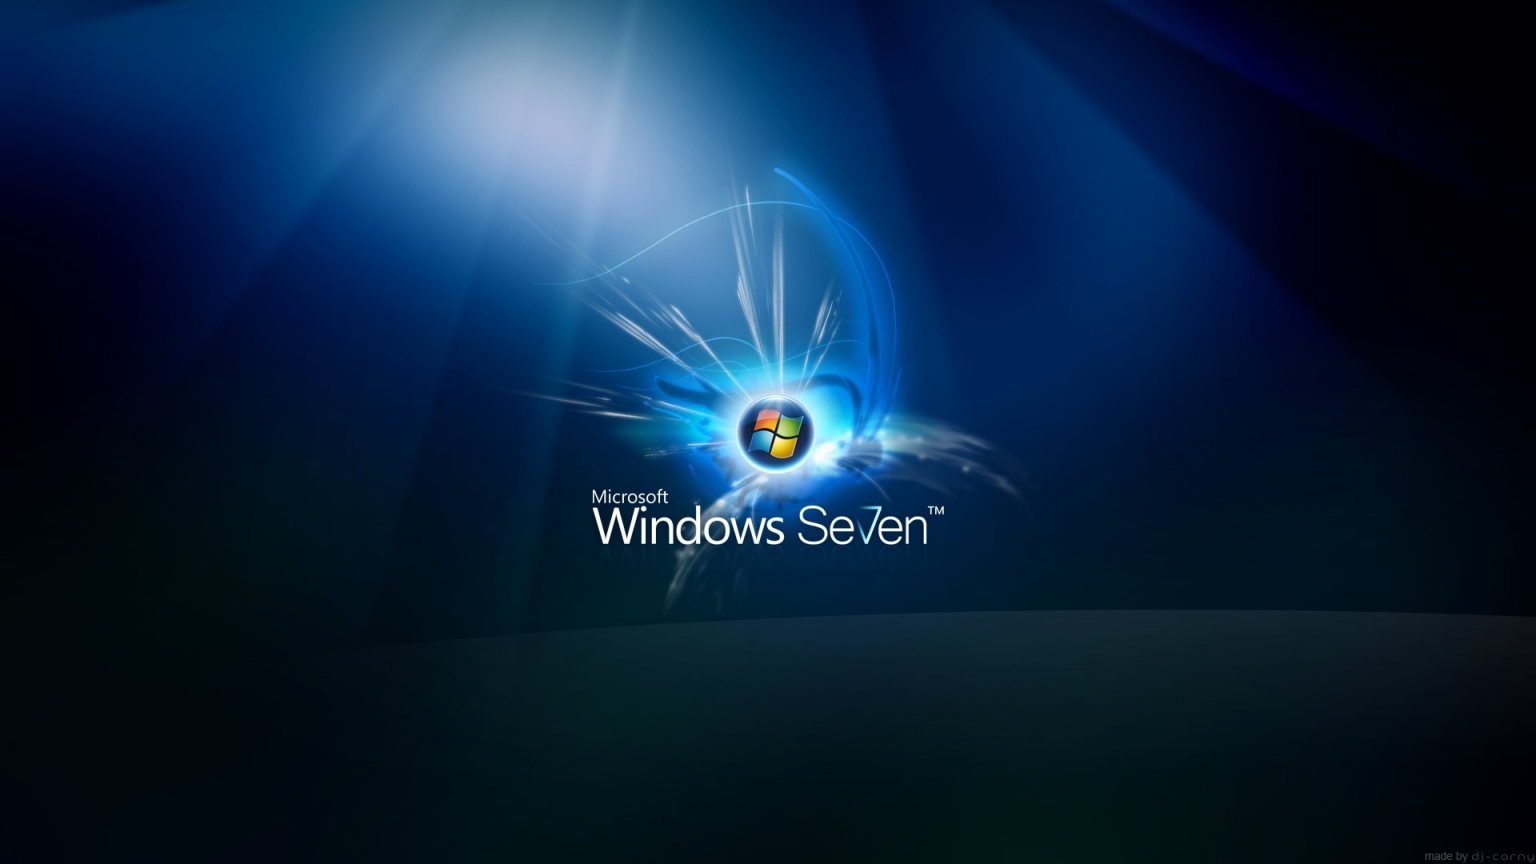 Windows Seven Glow for 1536 x 864 HDTV resolution